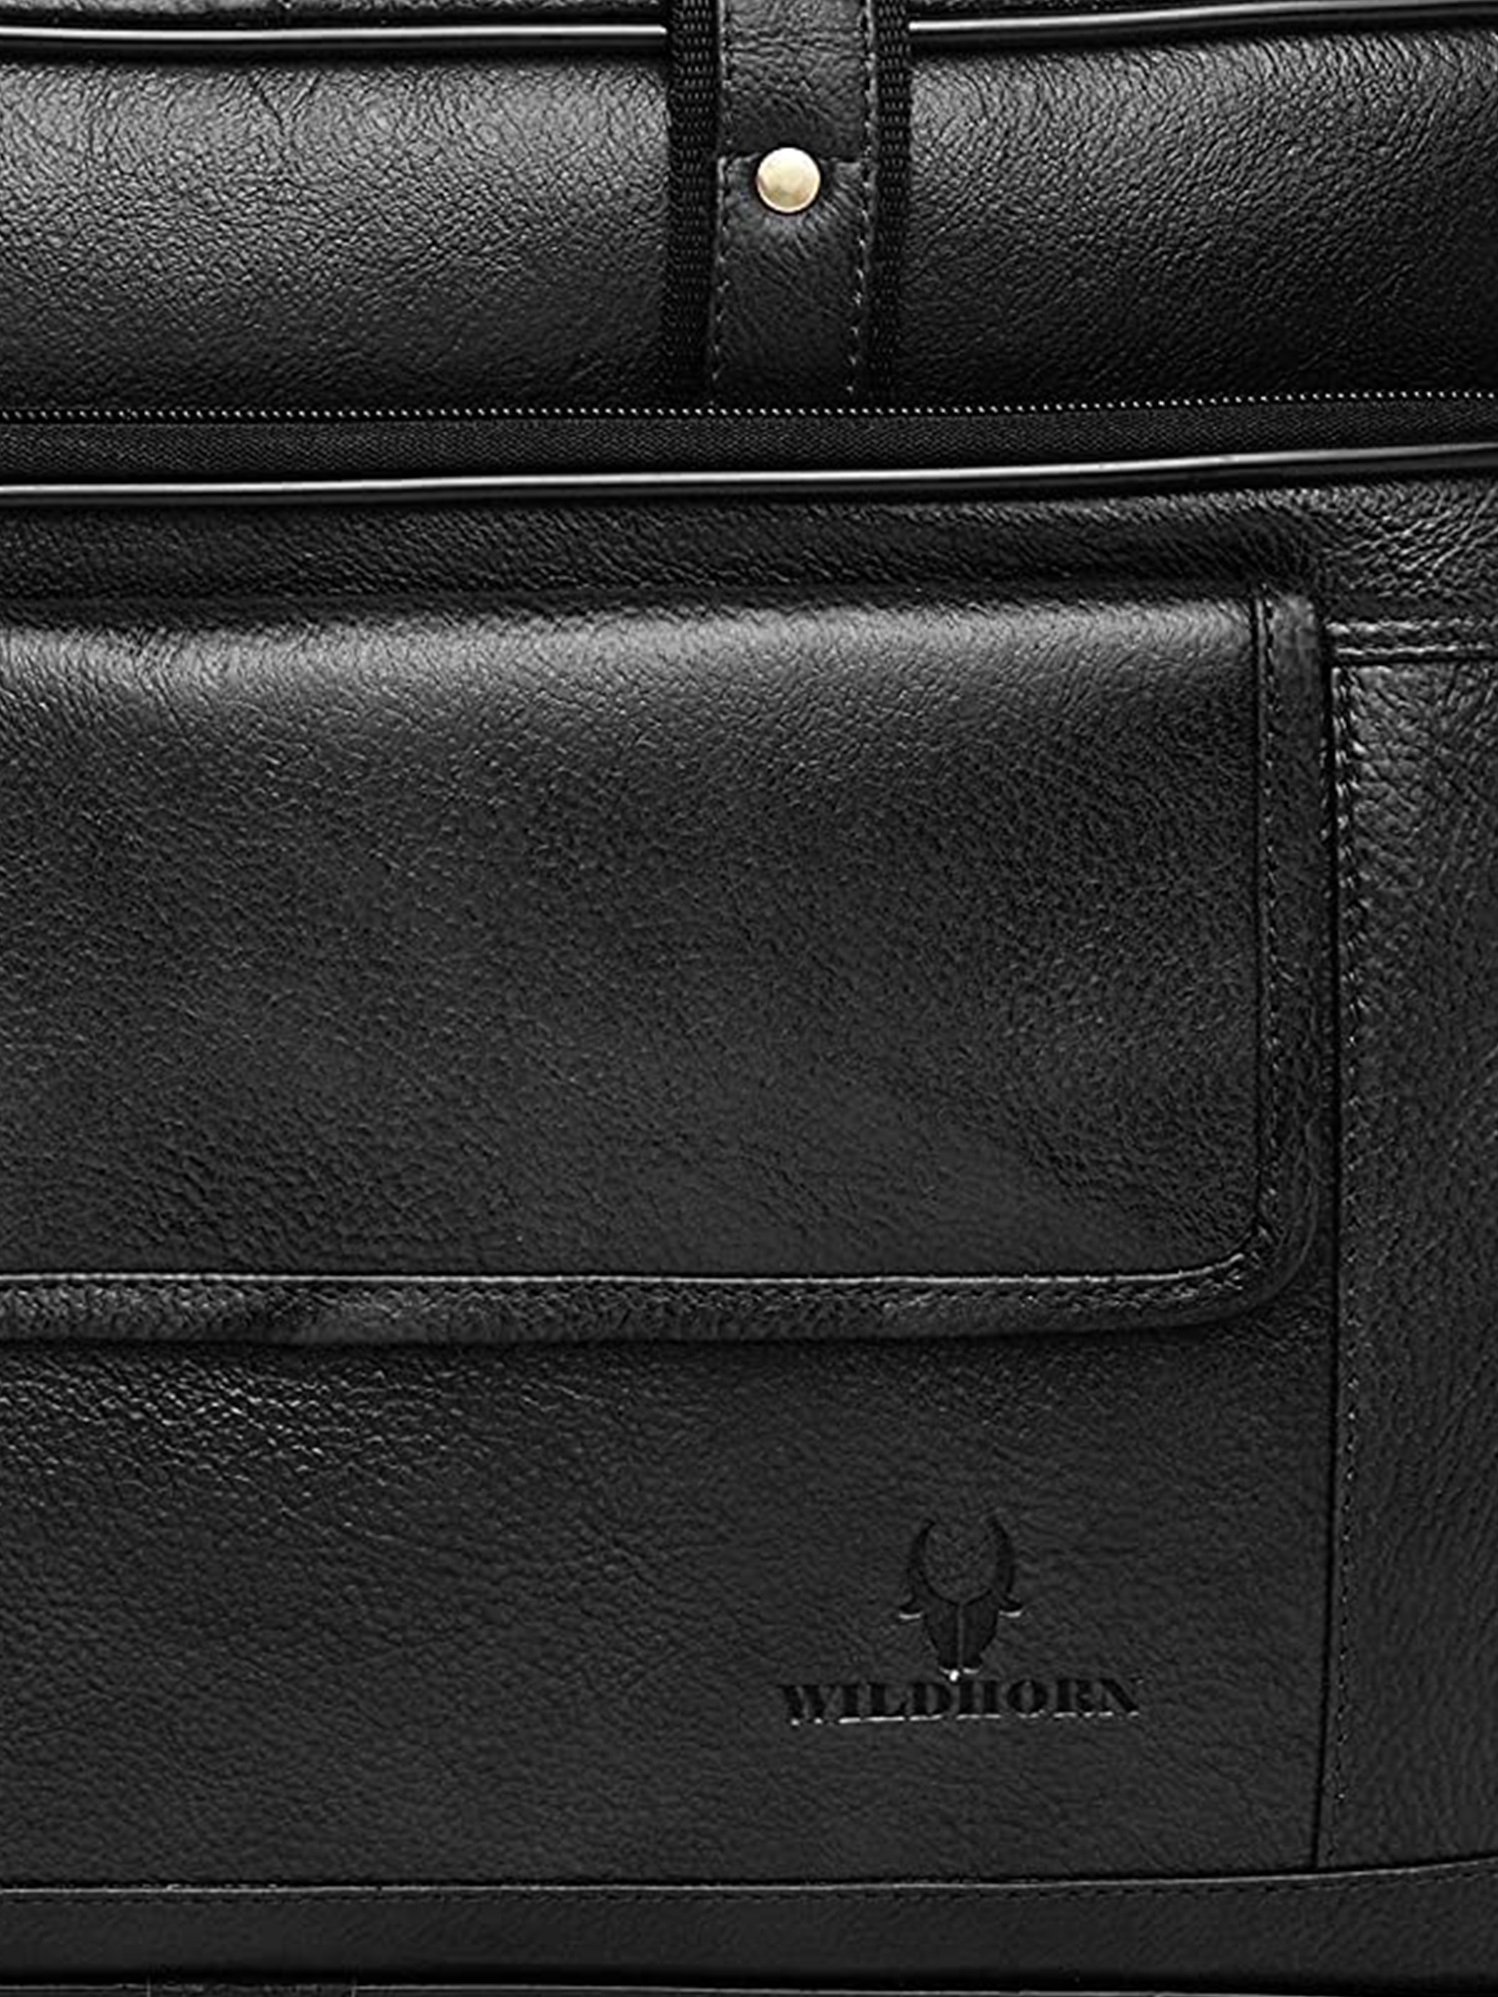 WildHorn | WildHorn 100% Genuine Classic Leather Black Laptop Bag for Men 4